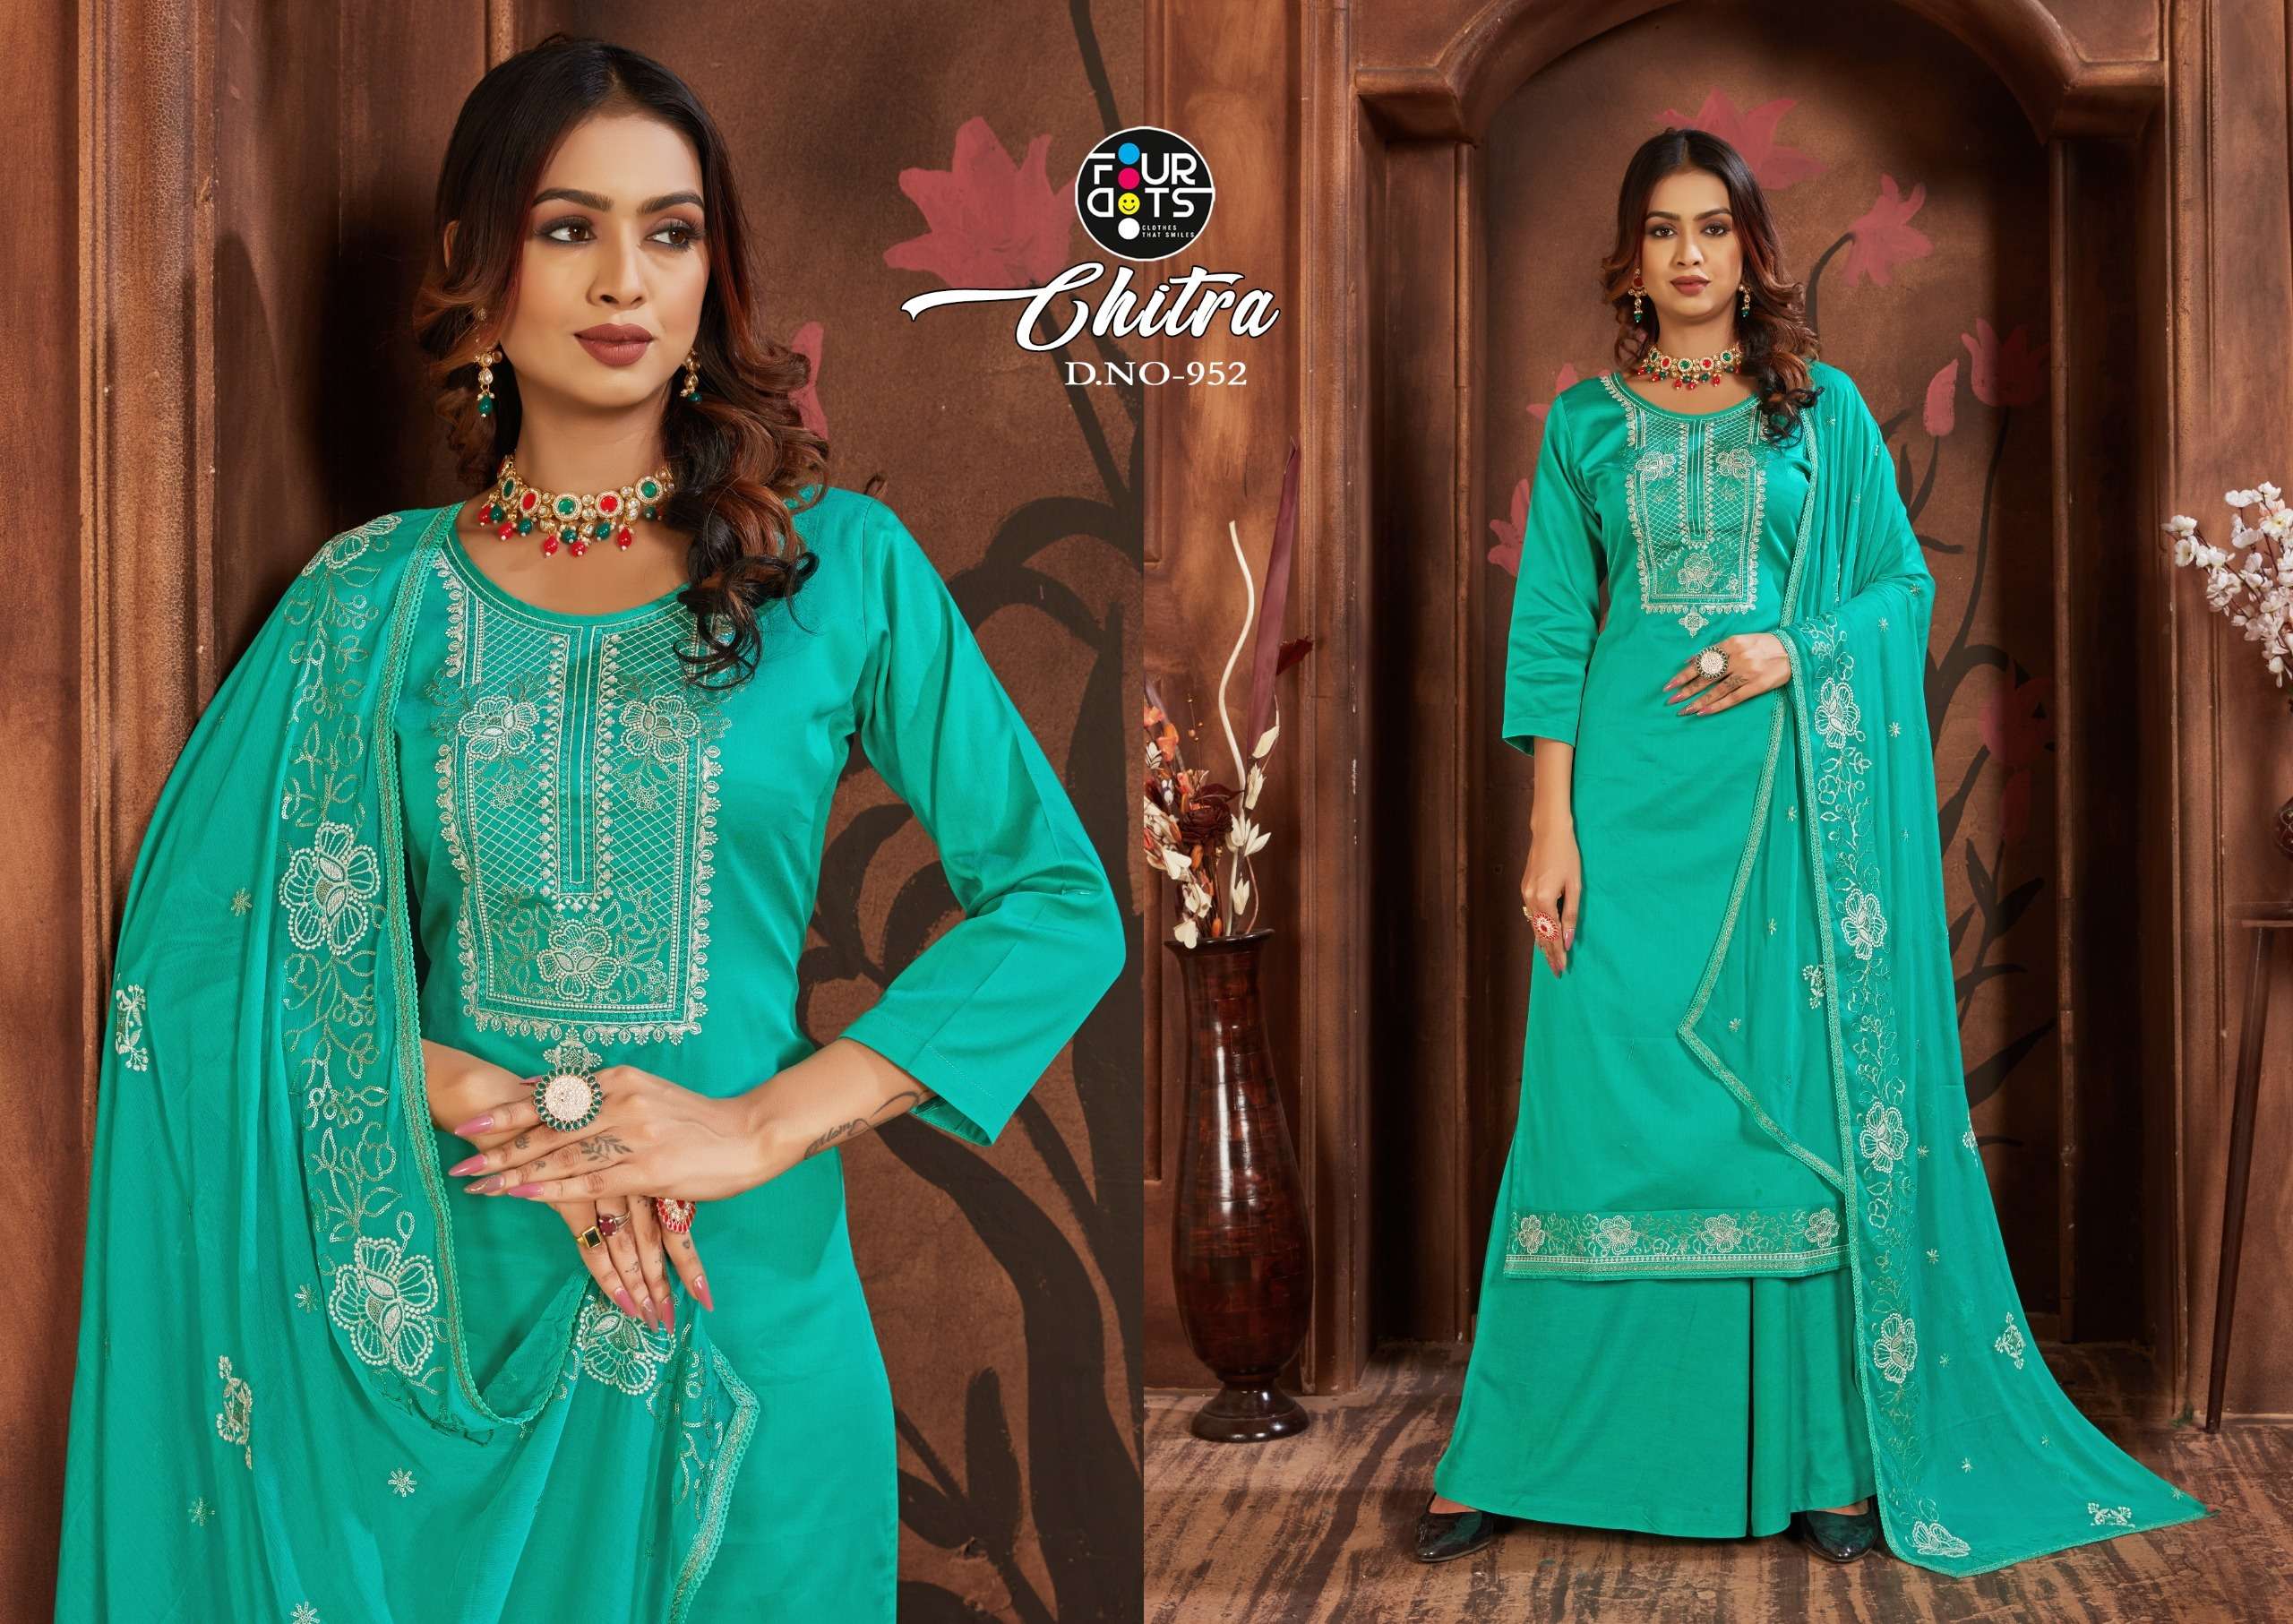 fourdots chitra jam silk elegant salwar suit catalog